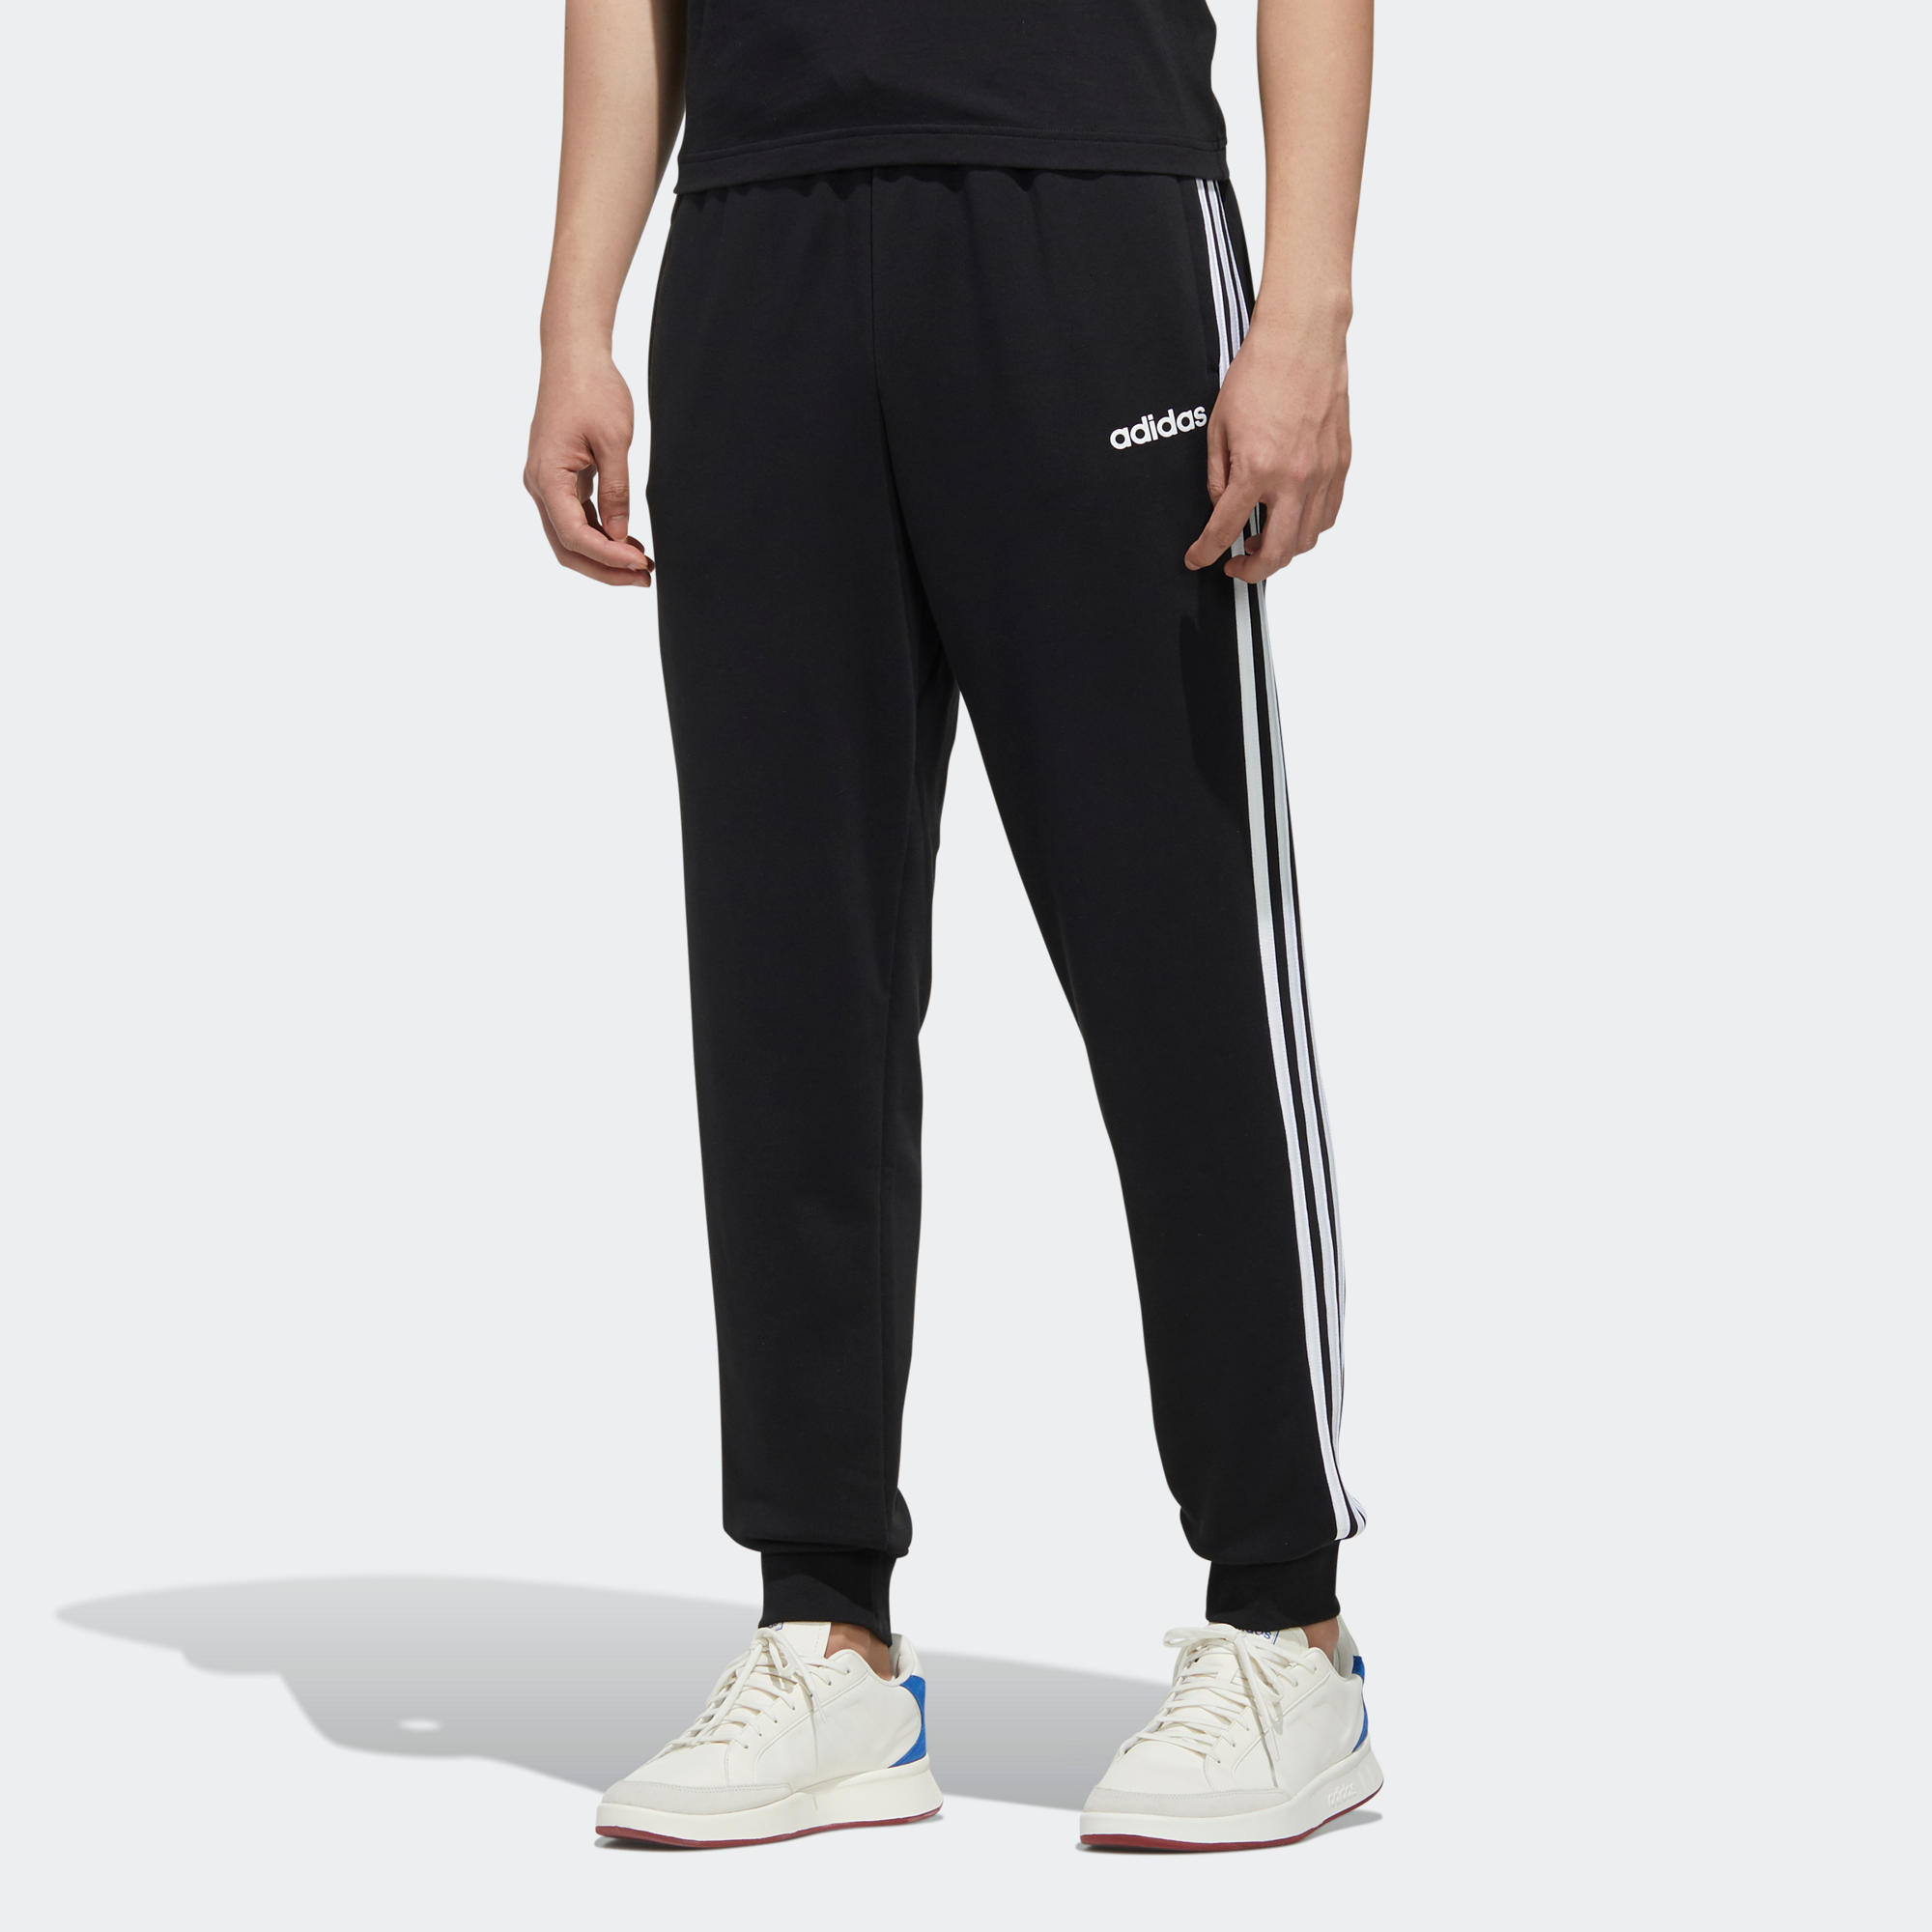 Pantalón chándal Adidas hombre 3S regular negro blanco ADIDAS | Decathlon